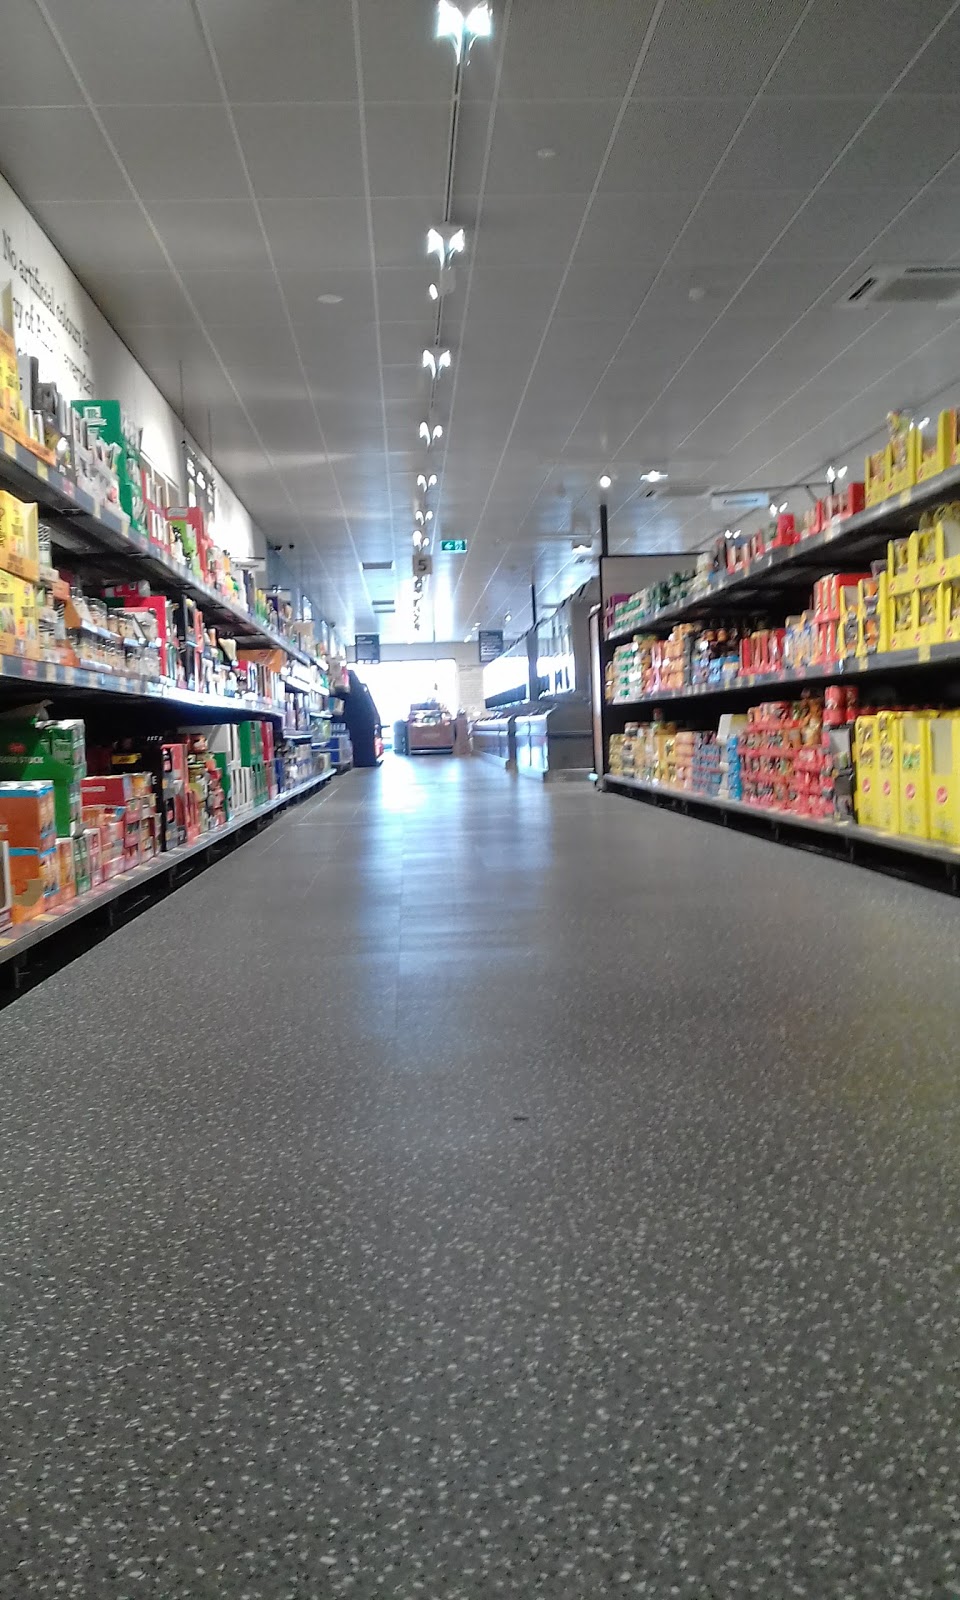 ALDI | grocery or supermarket | Bussell Hwy, Busselton WA 6280, Australia | 132534 OR +61 132534